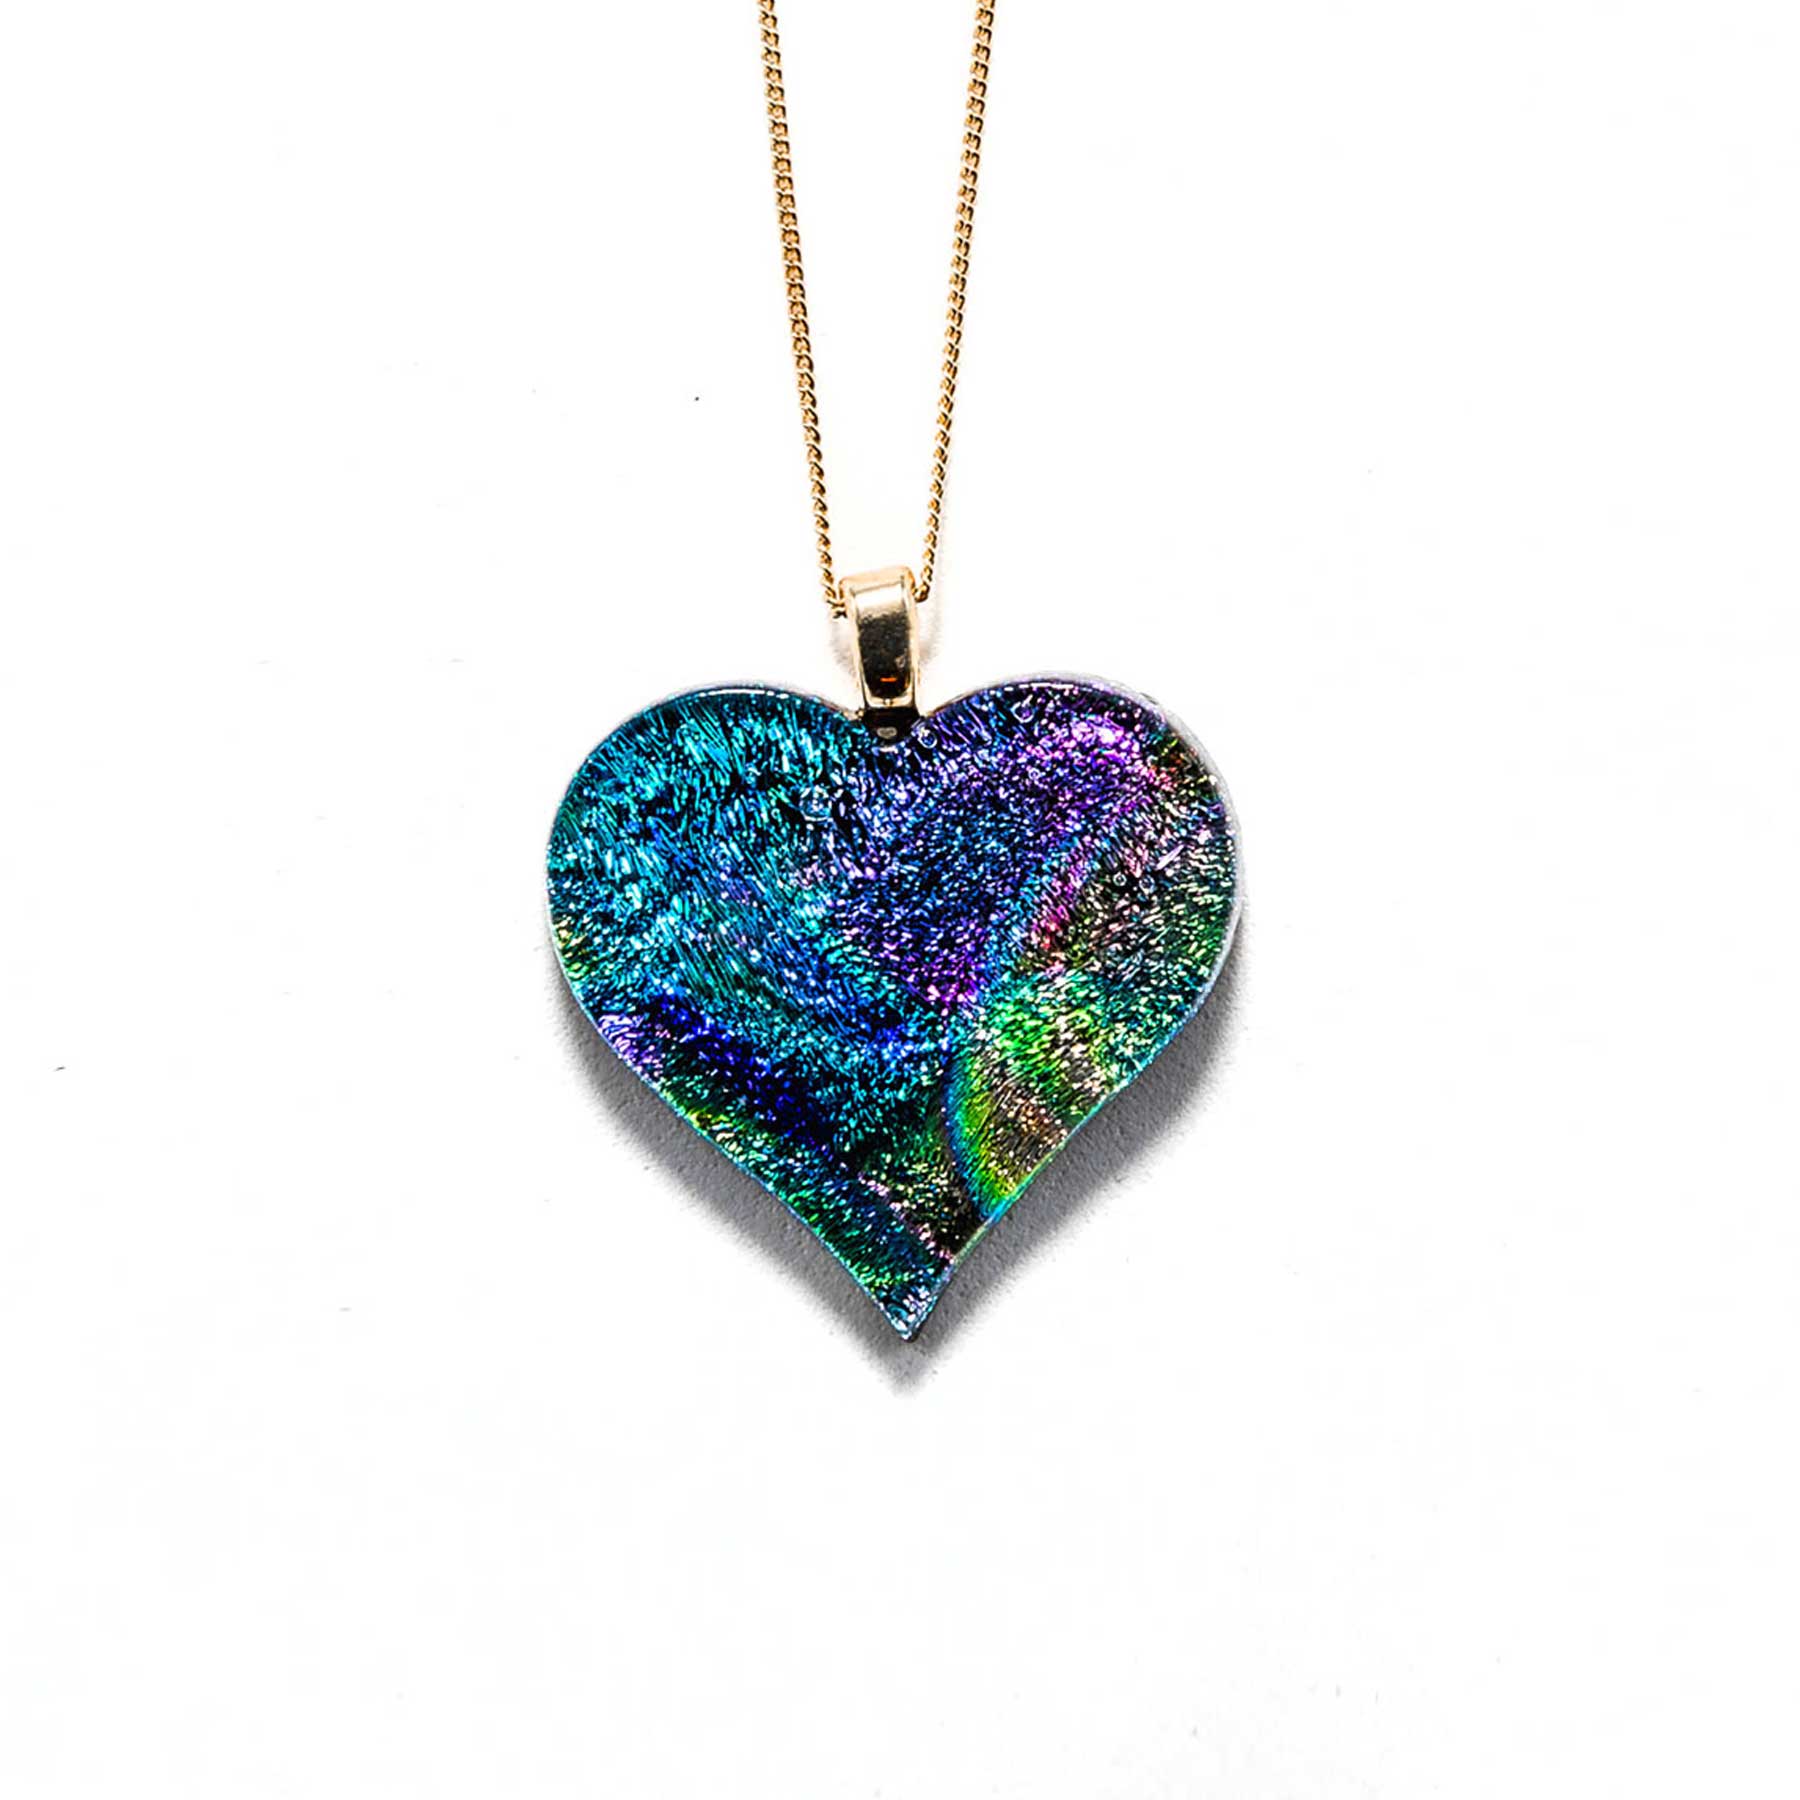 Glowies Glow Jewelry Art & Decor - Mardi Gras Opal Glow in the dark Heart  Necklace